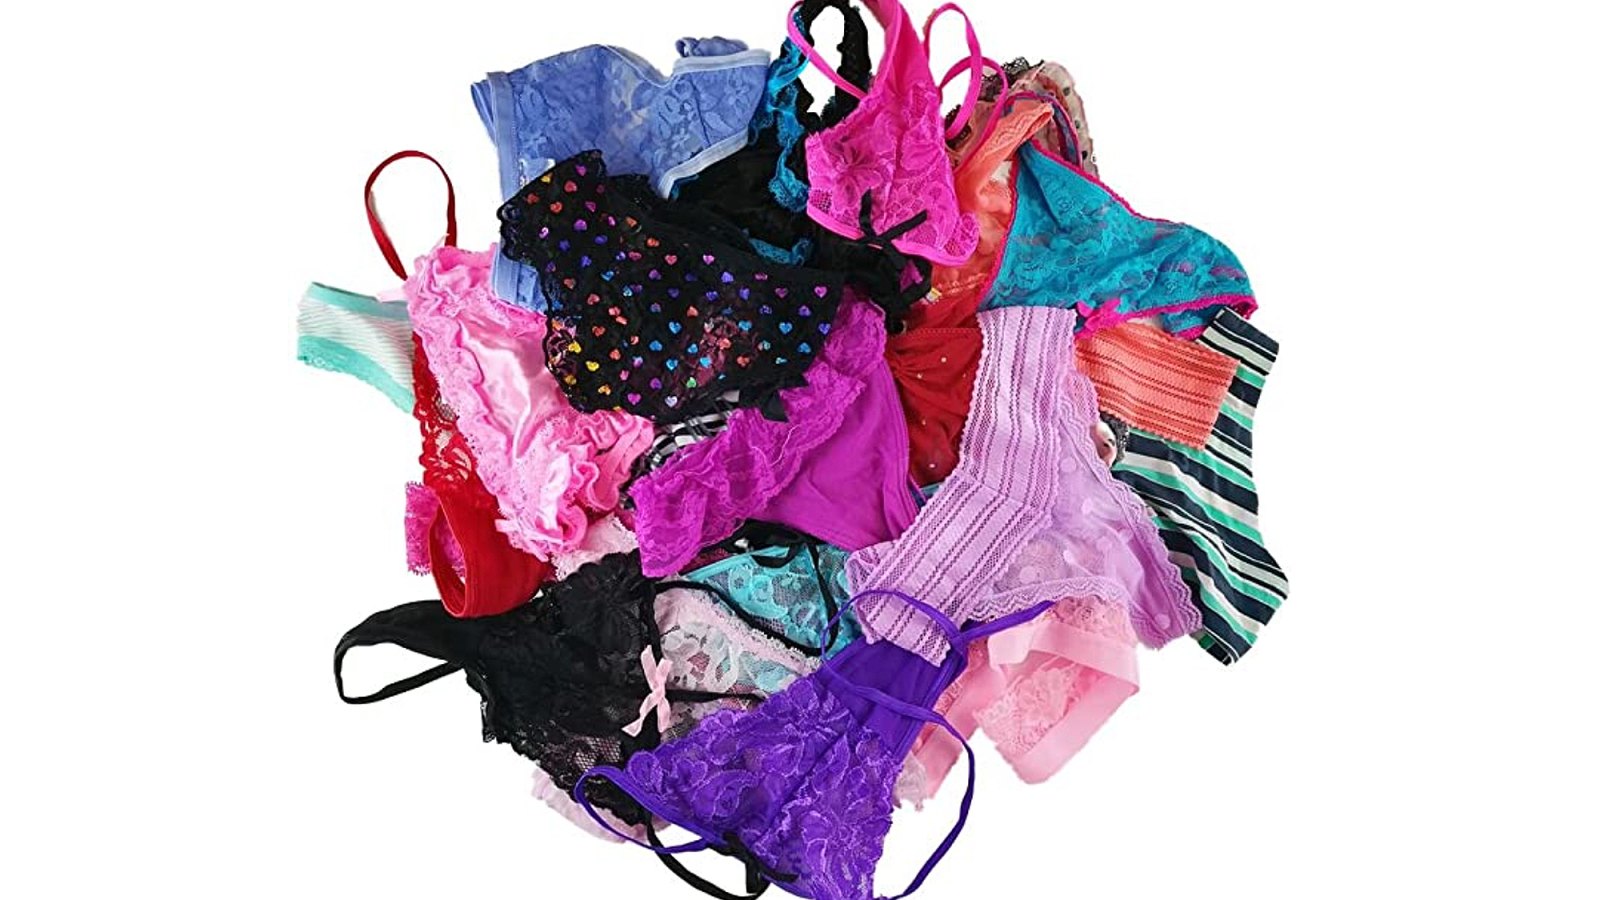 Jooniyaa Women's Variety of Underwear Pack T-Back Thong G-String Panties